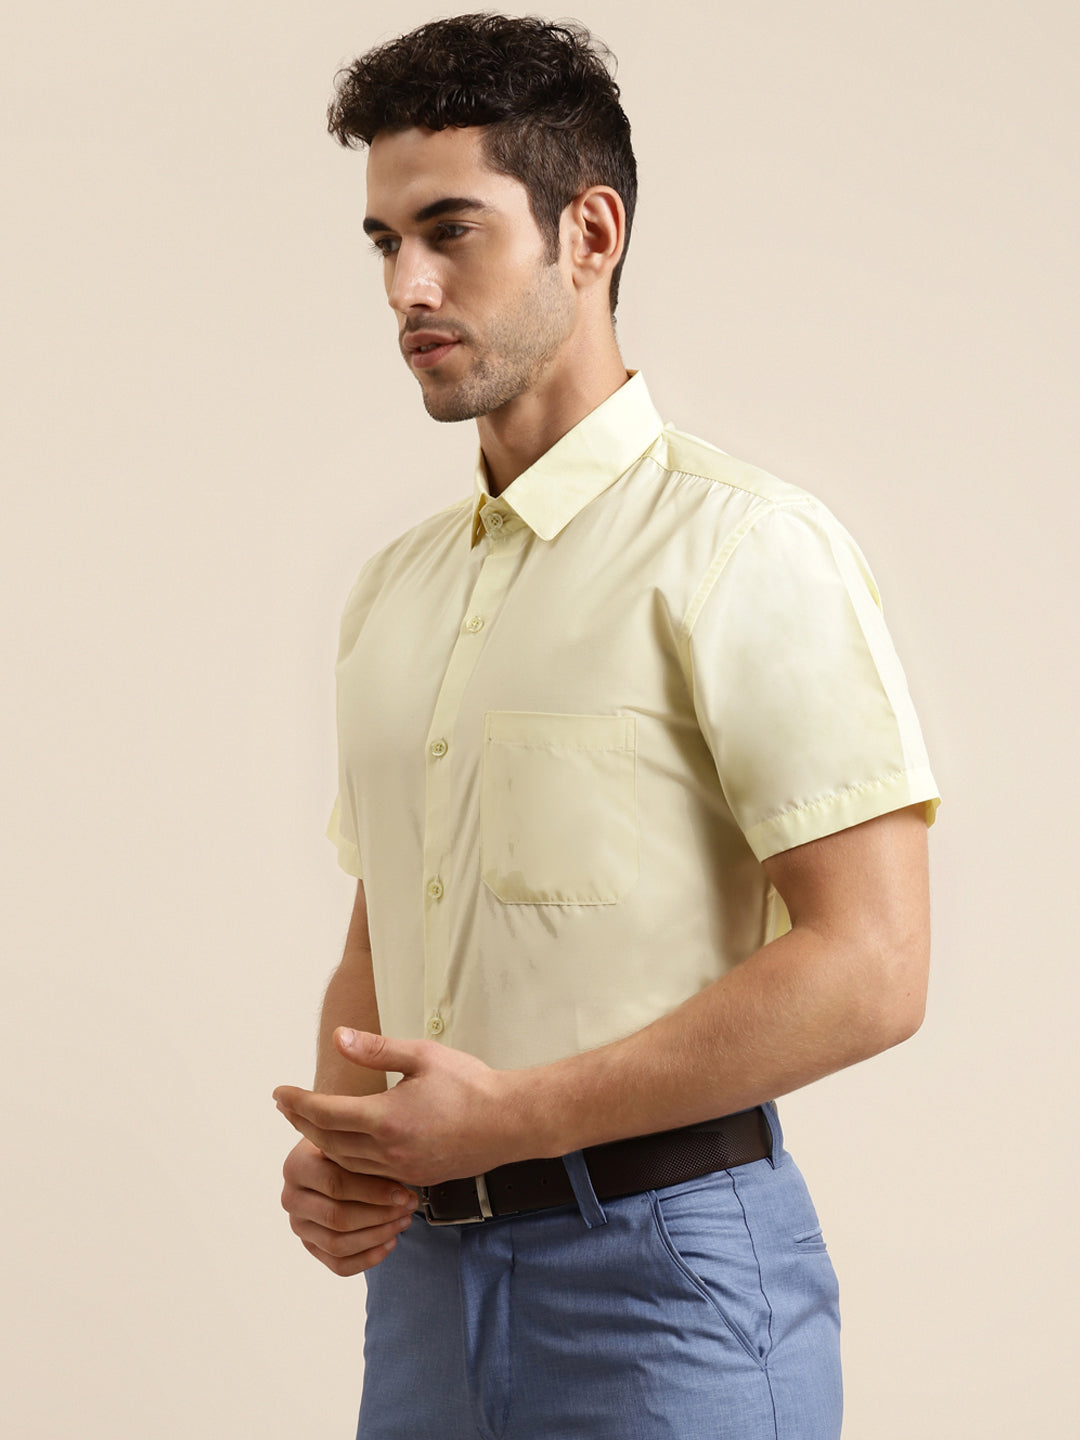 Men's Cotton Yellow Half sleeves Casual Shirt